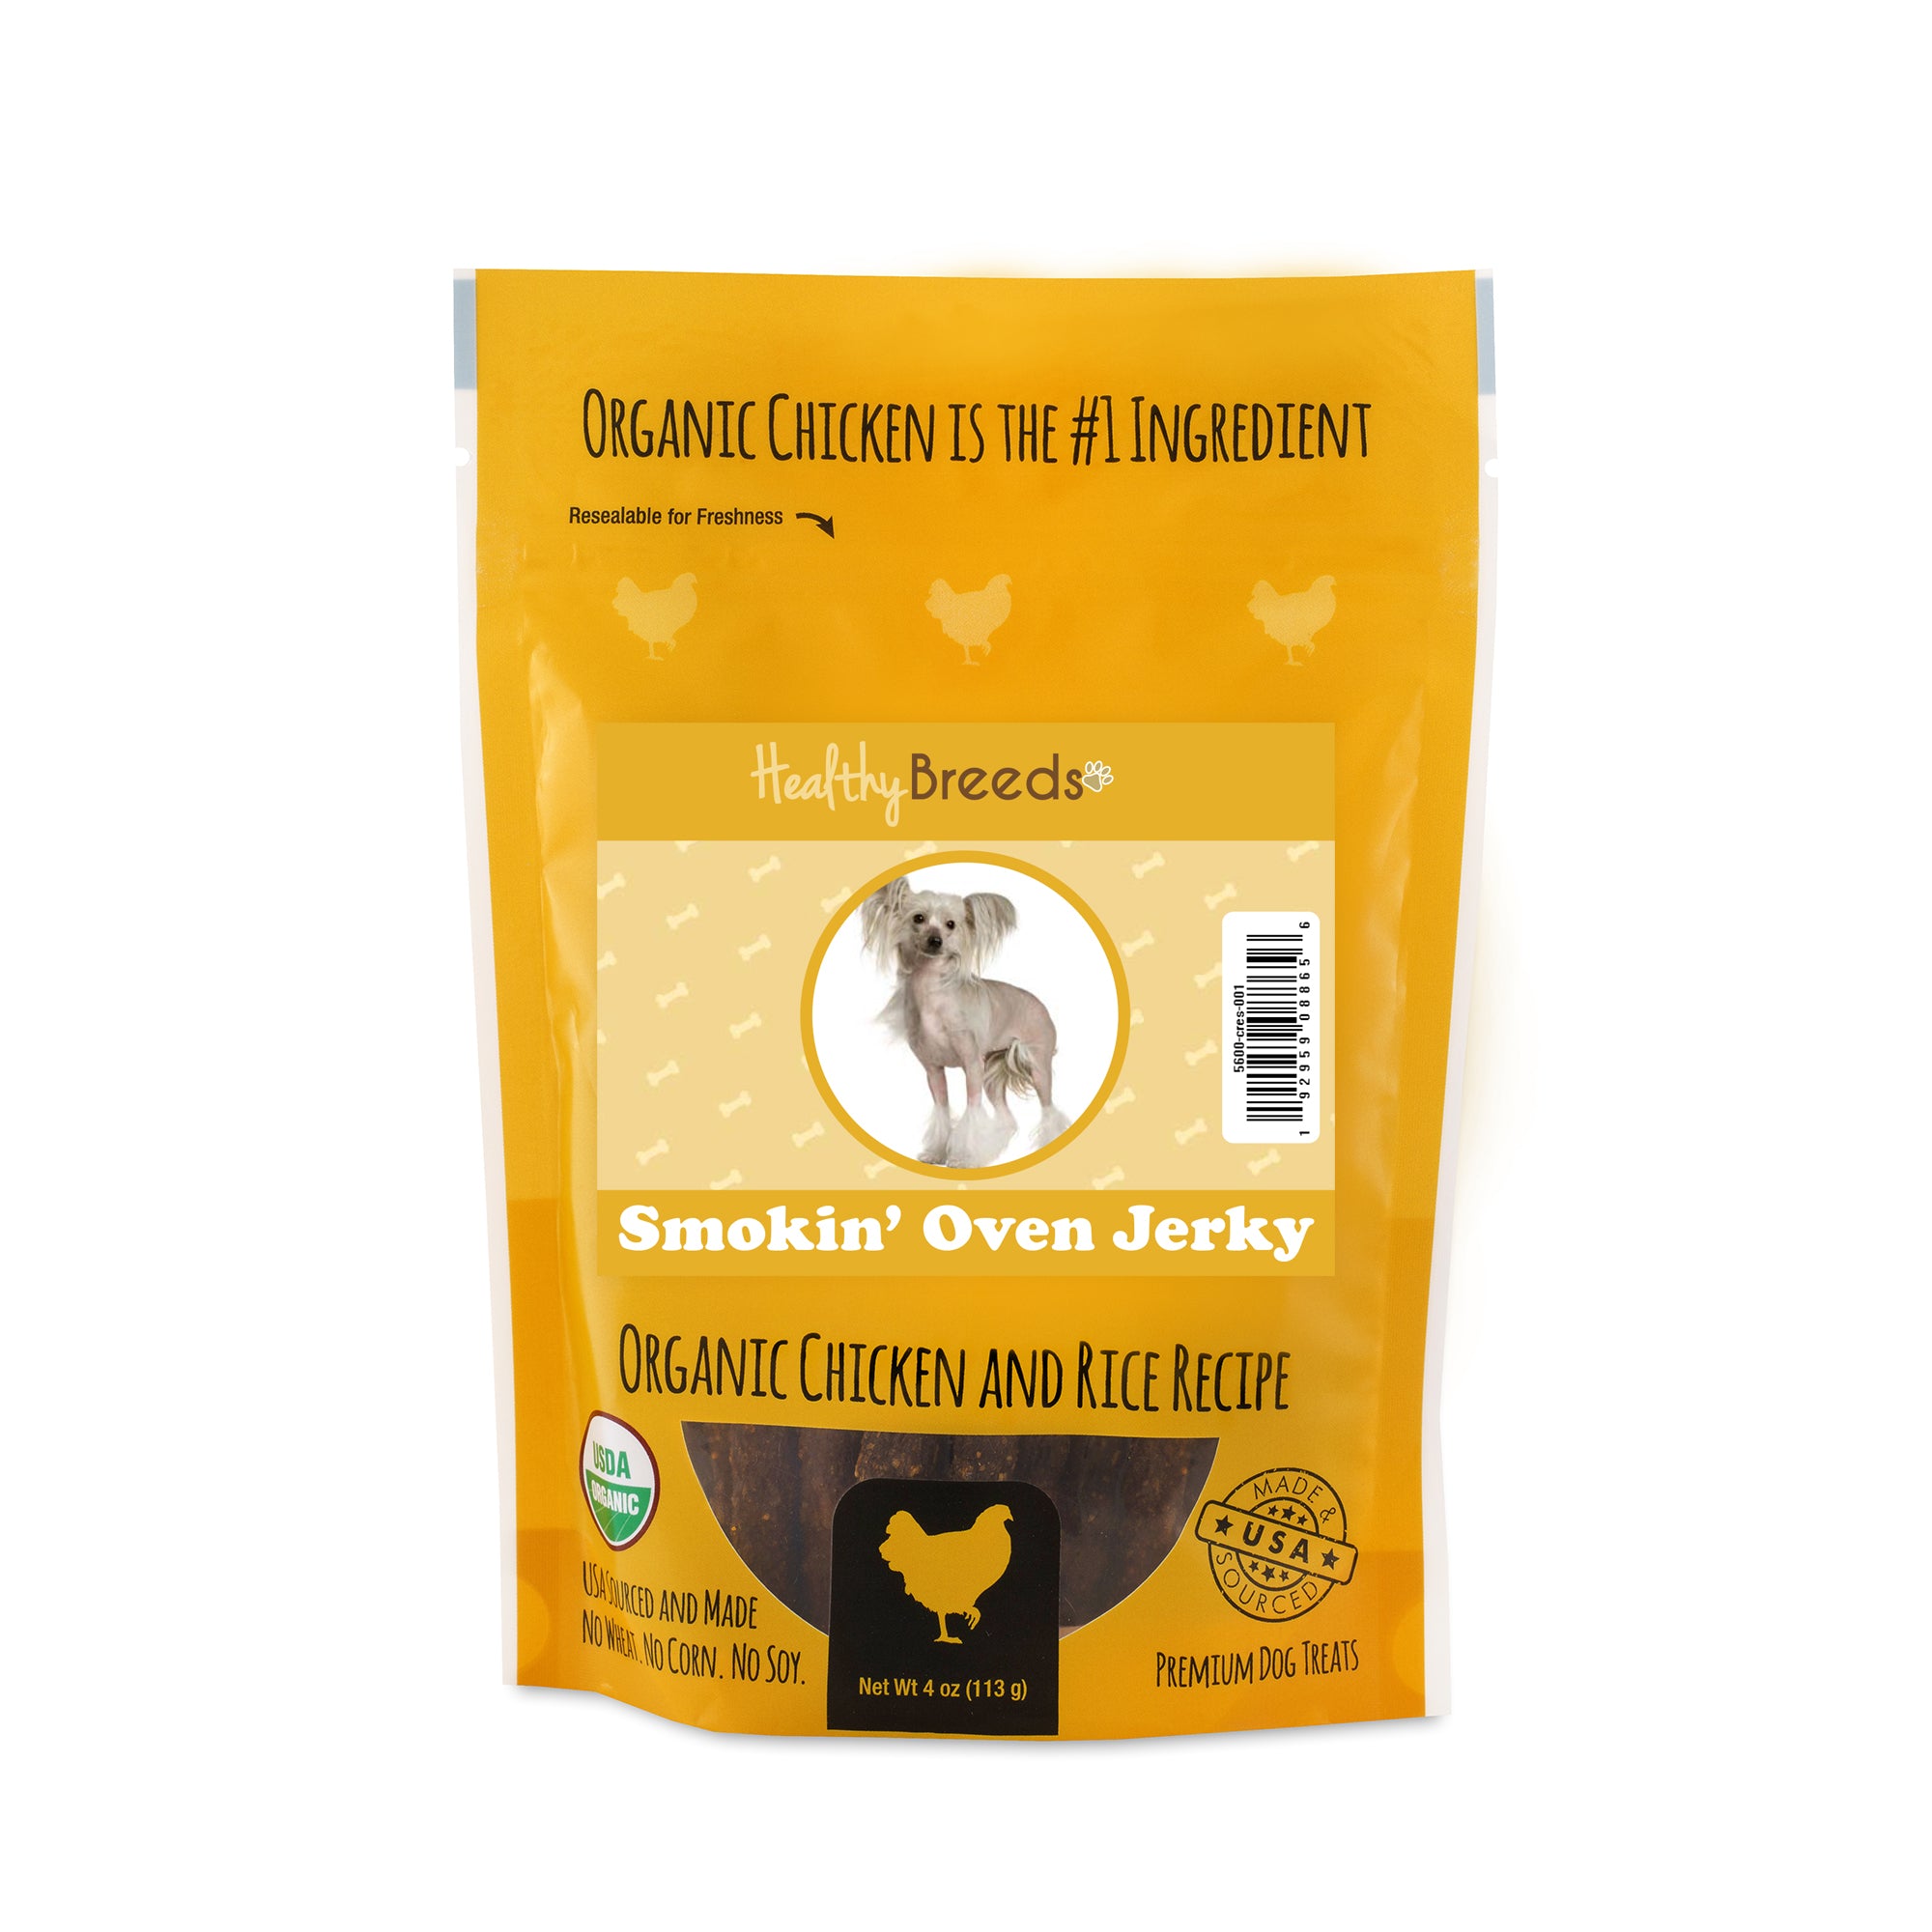 Chinese Crested Smokin' Oven Organic Chicken & Rice Recipe Jerky Dog Treats 4 oz